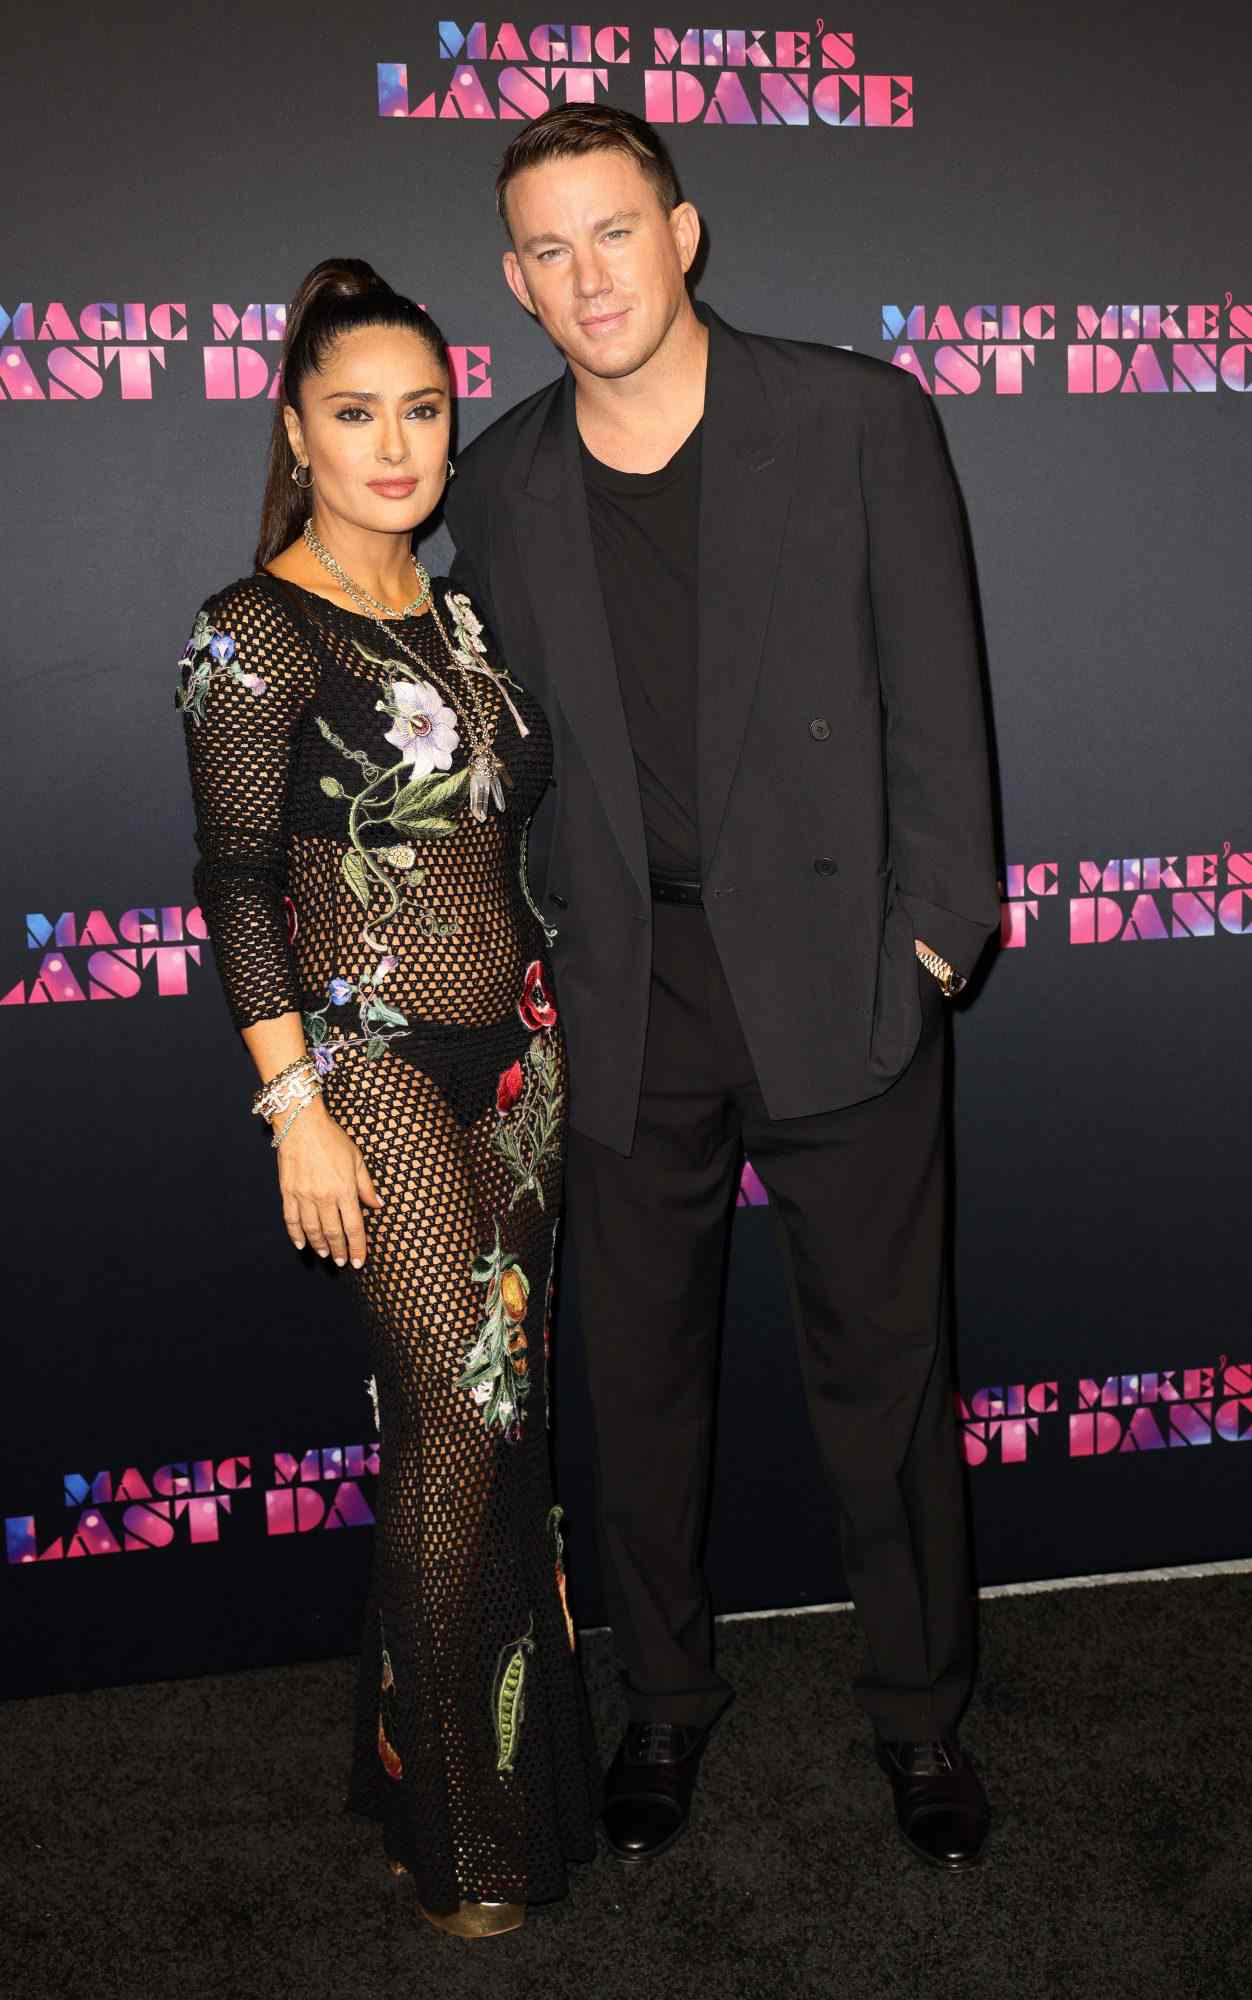 Salma Hayek and Channing Tatum at "Magic Mike's Last Dance" World Premiere